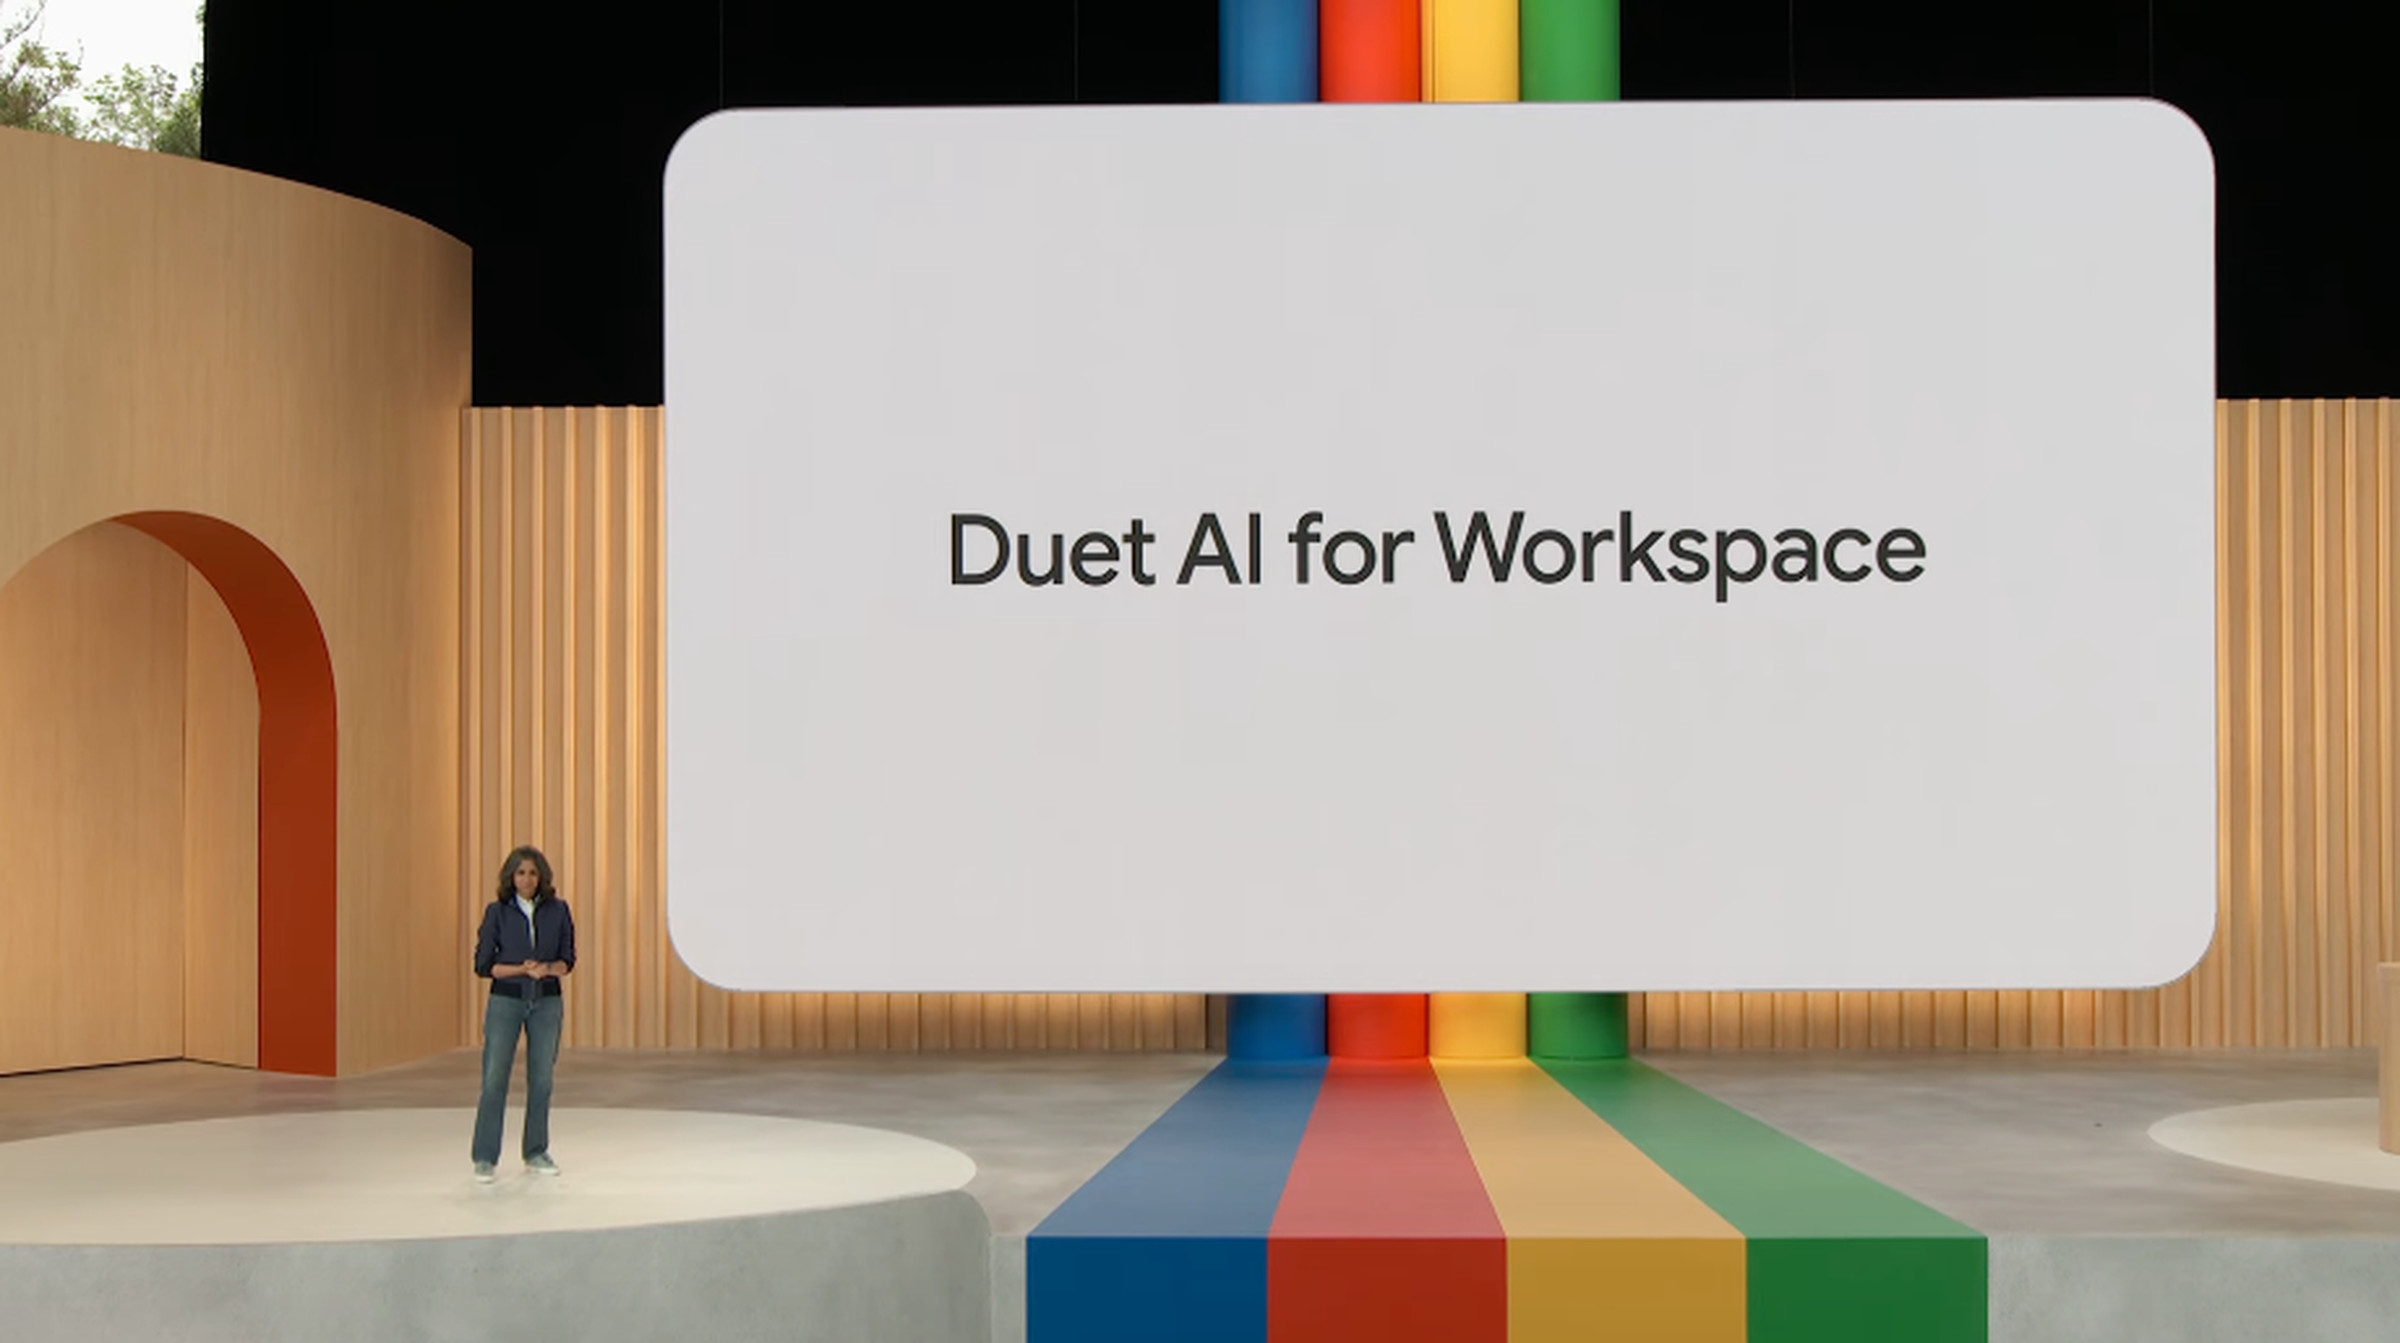 Una fotografia di una diapositiva di presentazione che recita "Duet AI for Workspace".